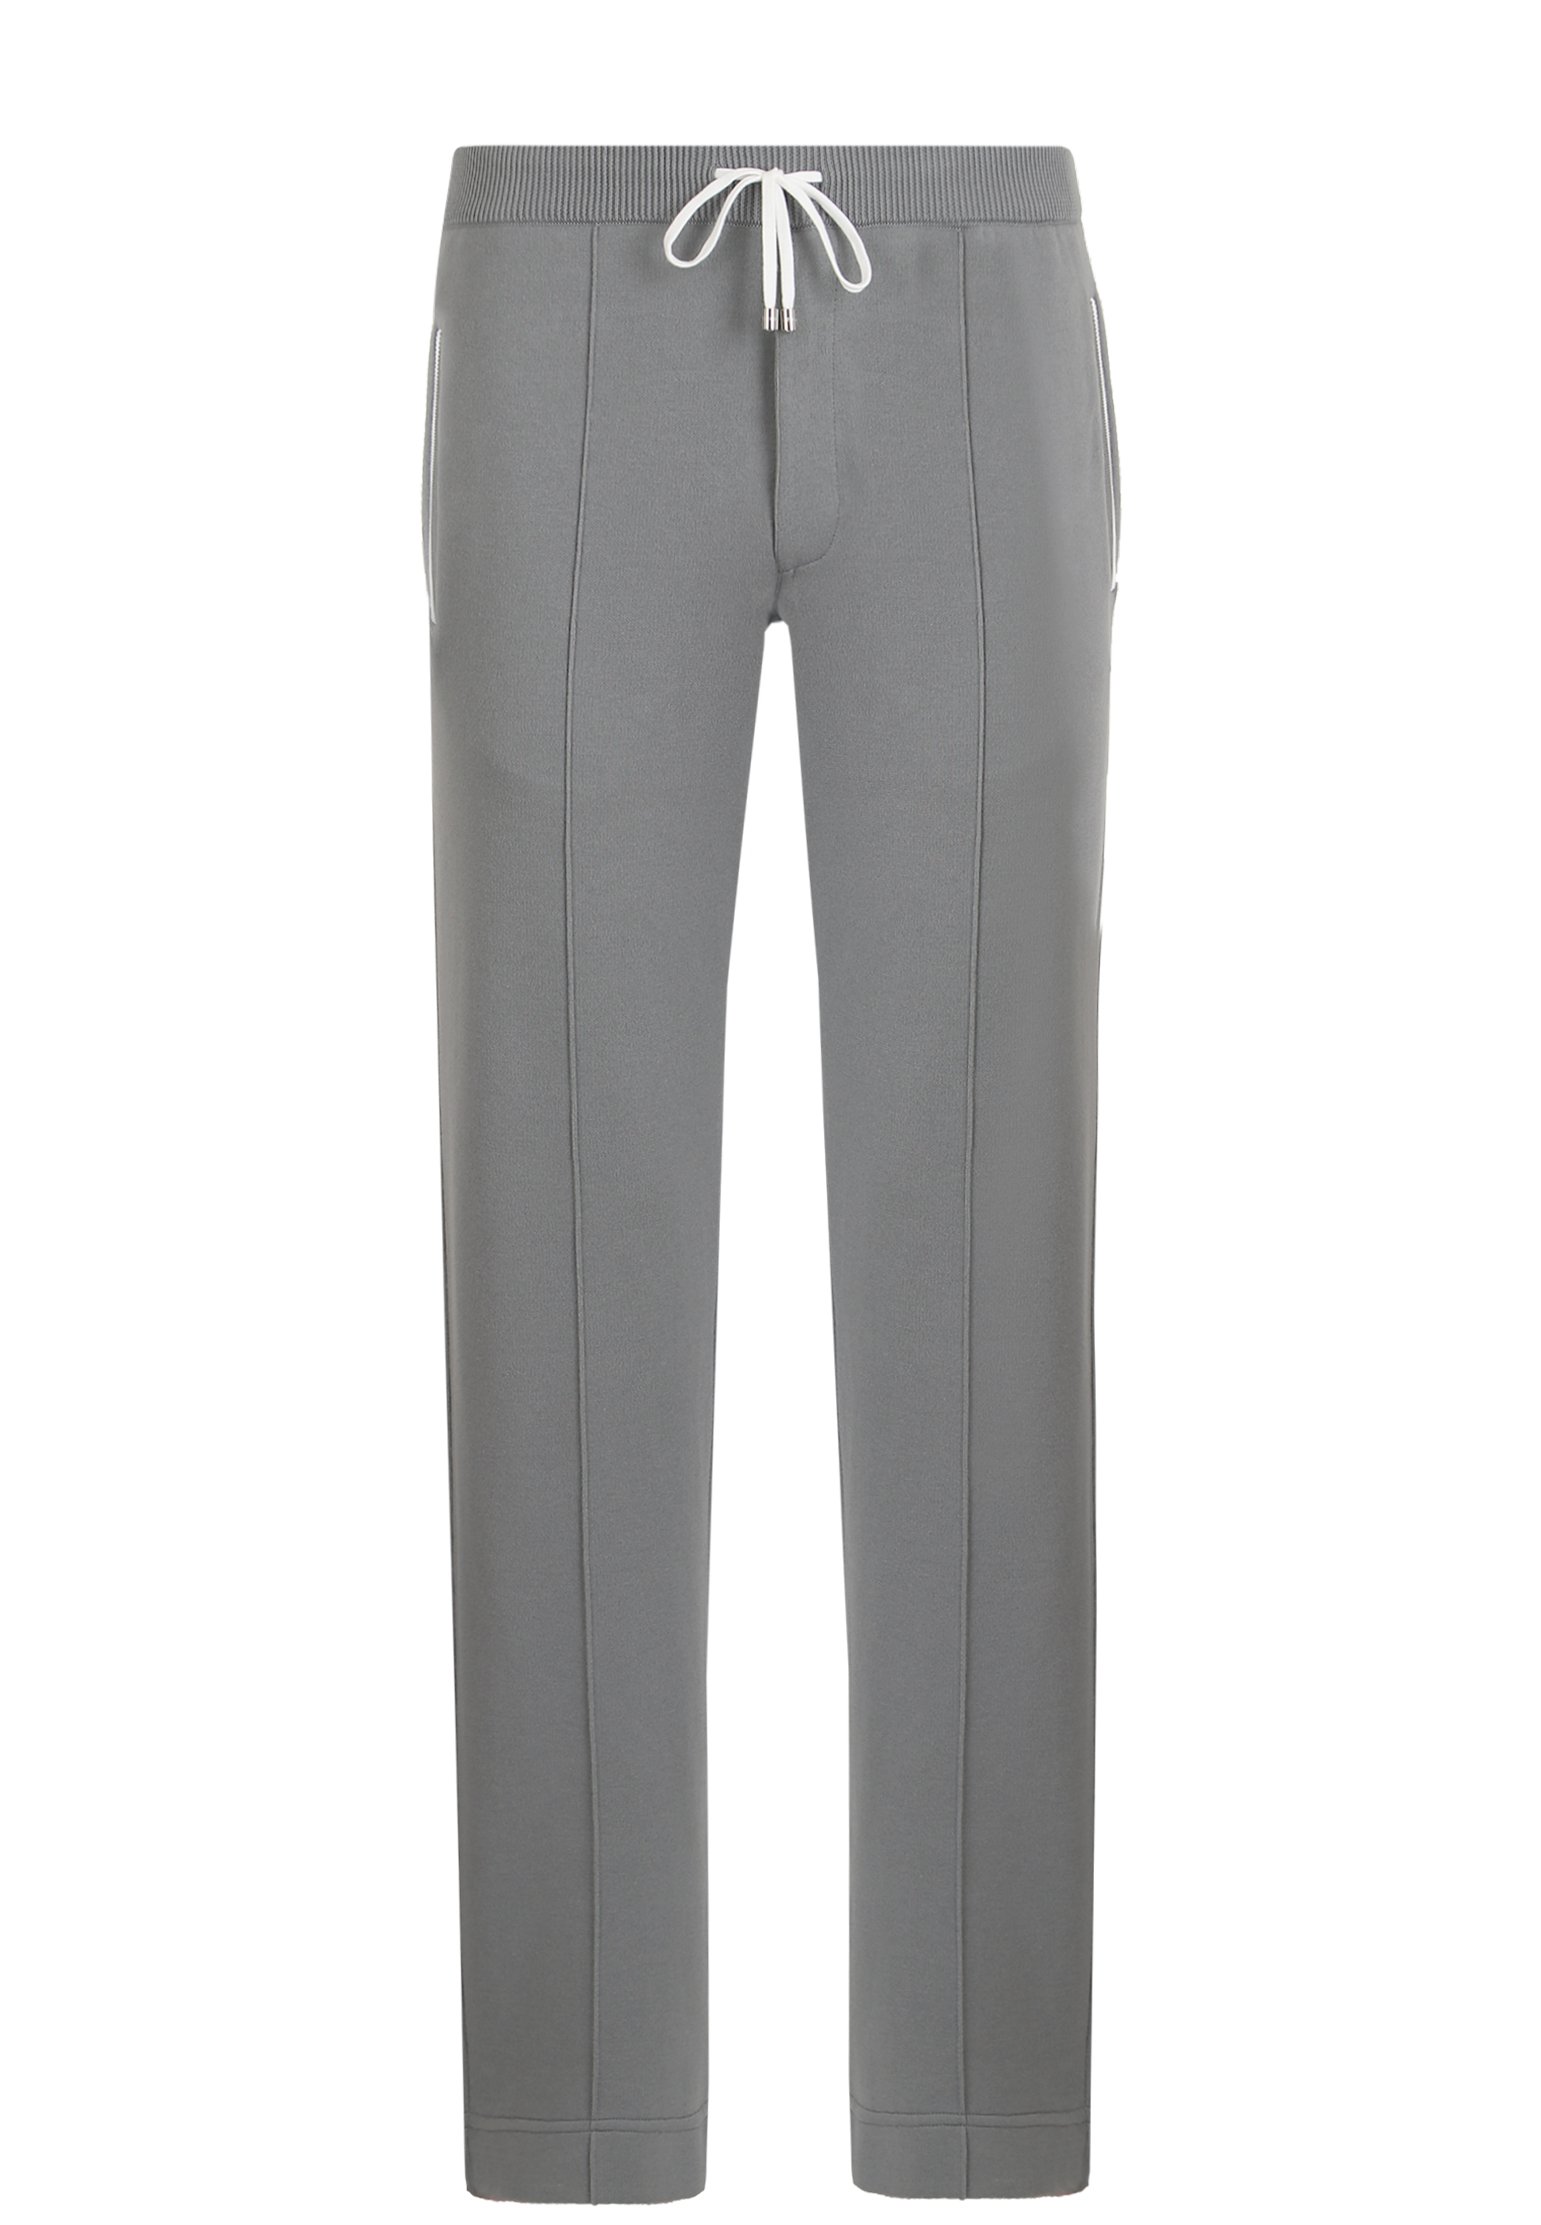 Jogging suit STEFANO RICCI Color: light grey (Code: 322) in online store Allure